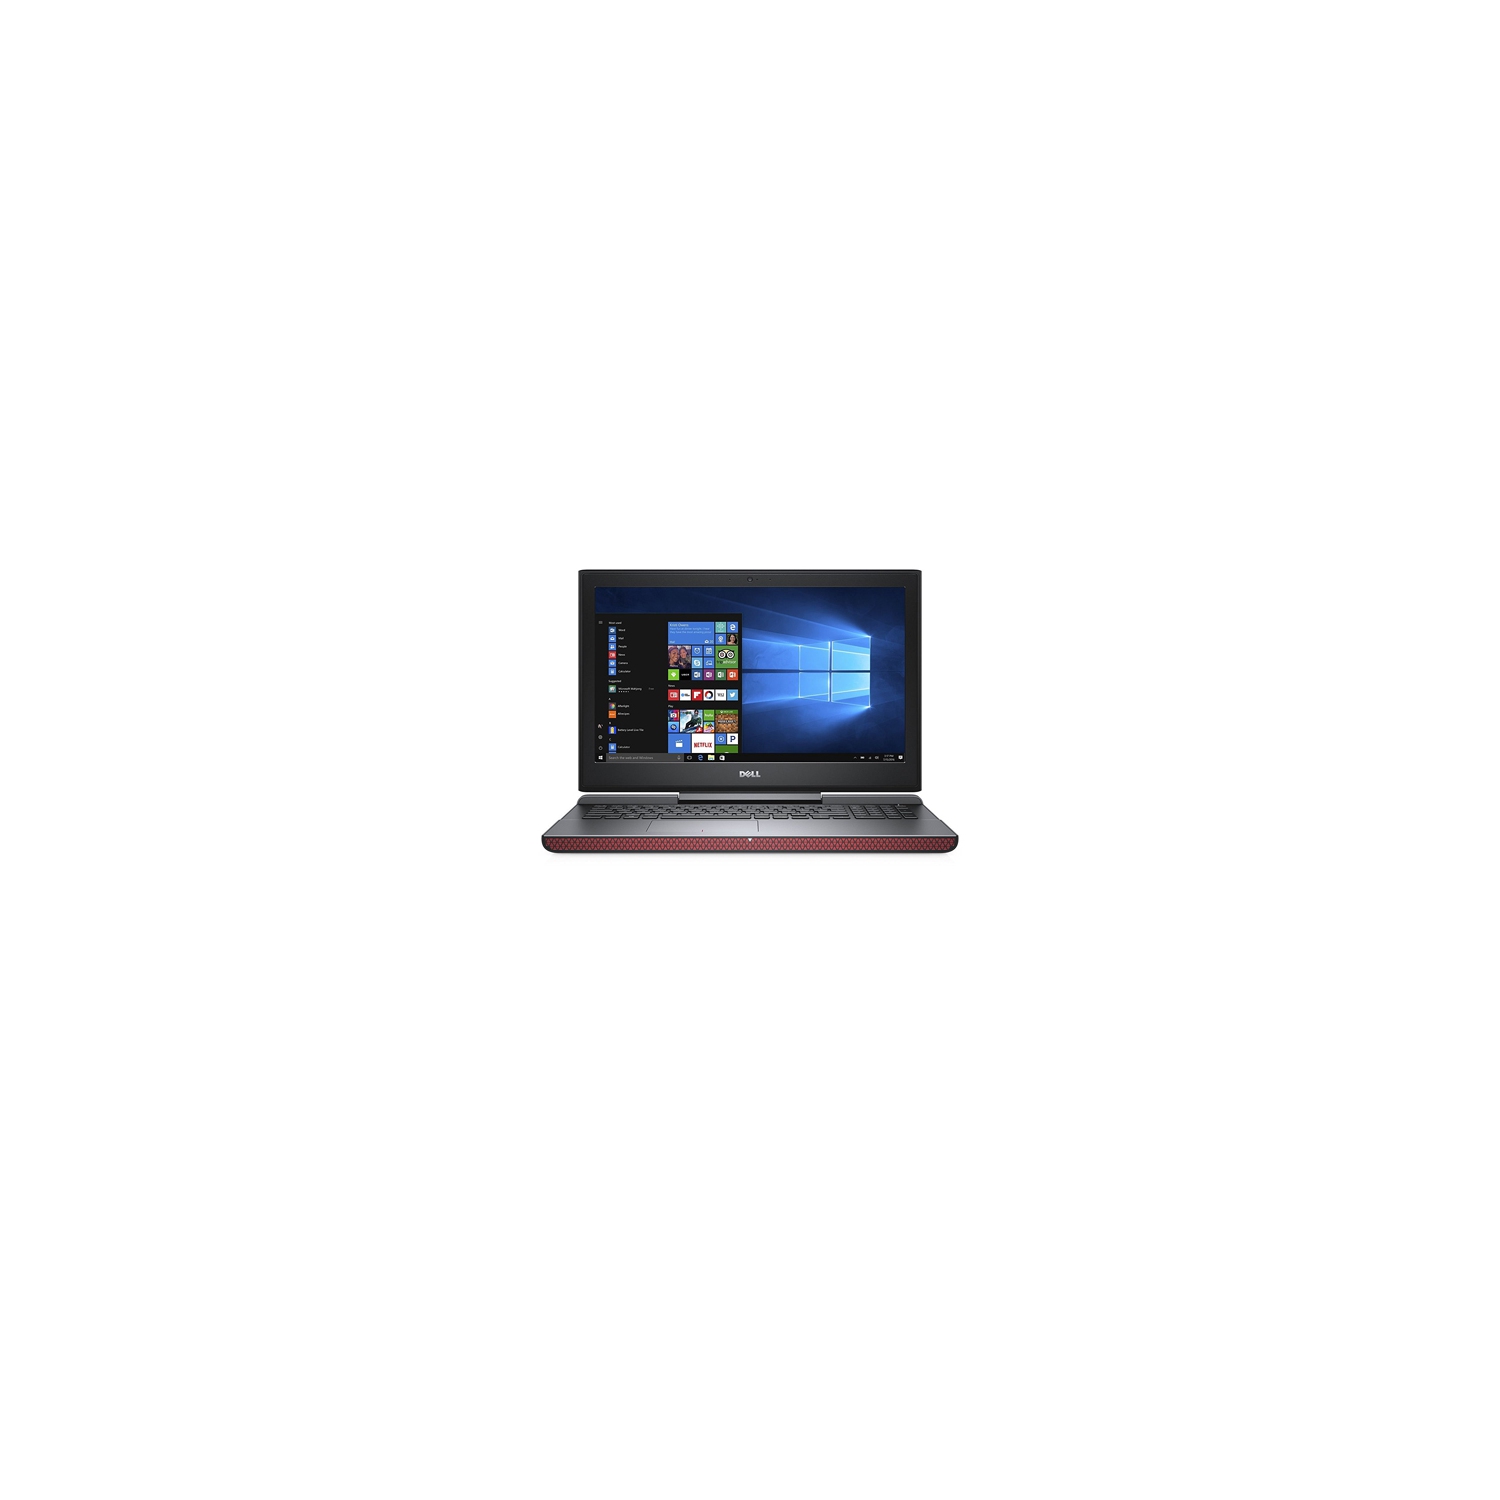 Dell Inspiron 15 7567 15.6-in Laptop - Black (Intel i5-7300HQ, 8GB RAM/1TB HDD/Windows 10) FHD Gaming Laptop, English